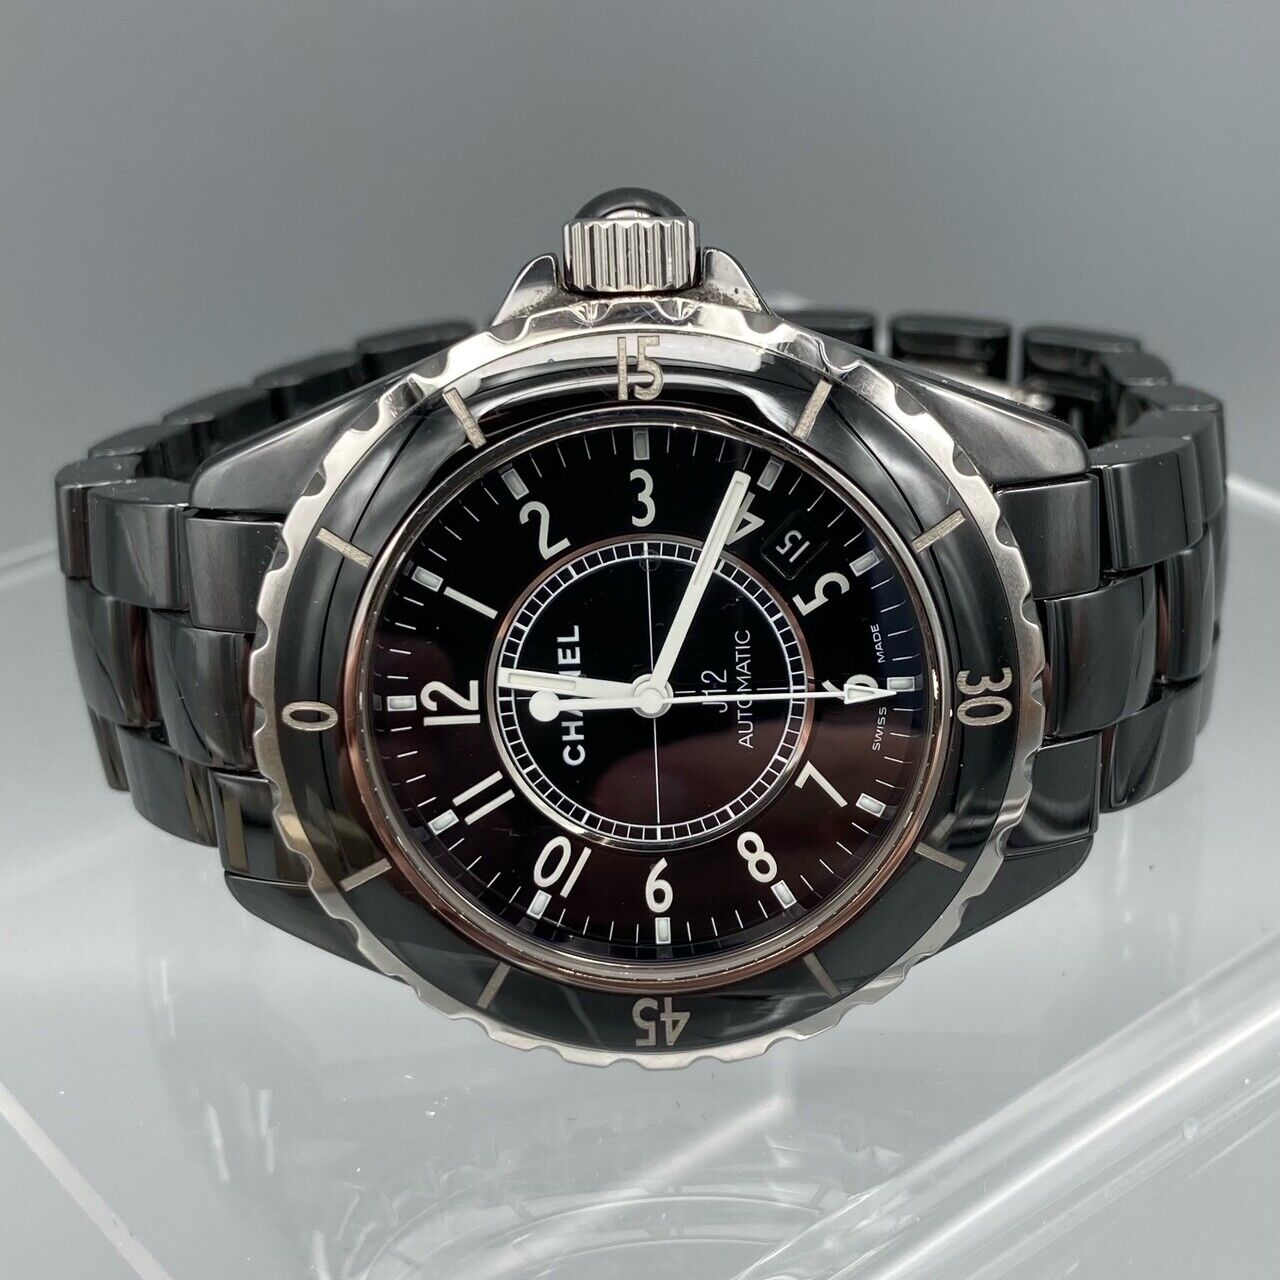 Chanel J12 Black Ceramic Automatic Midsize Watch H0685